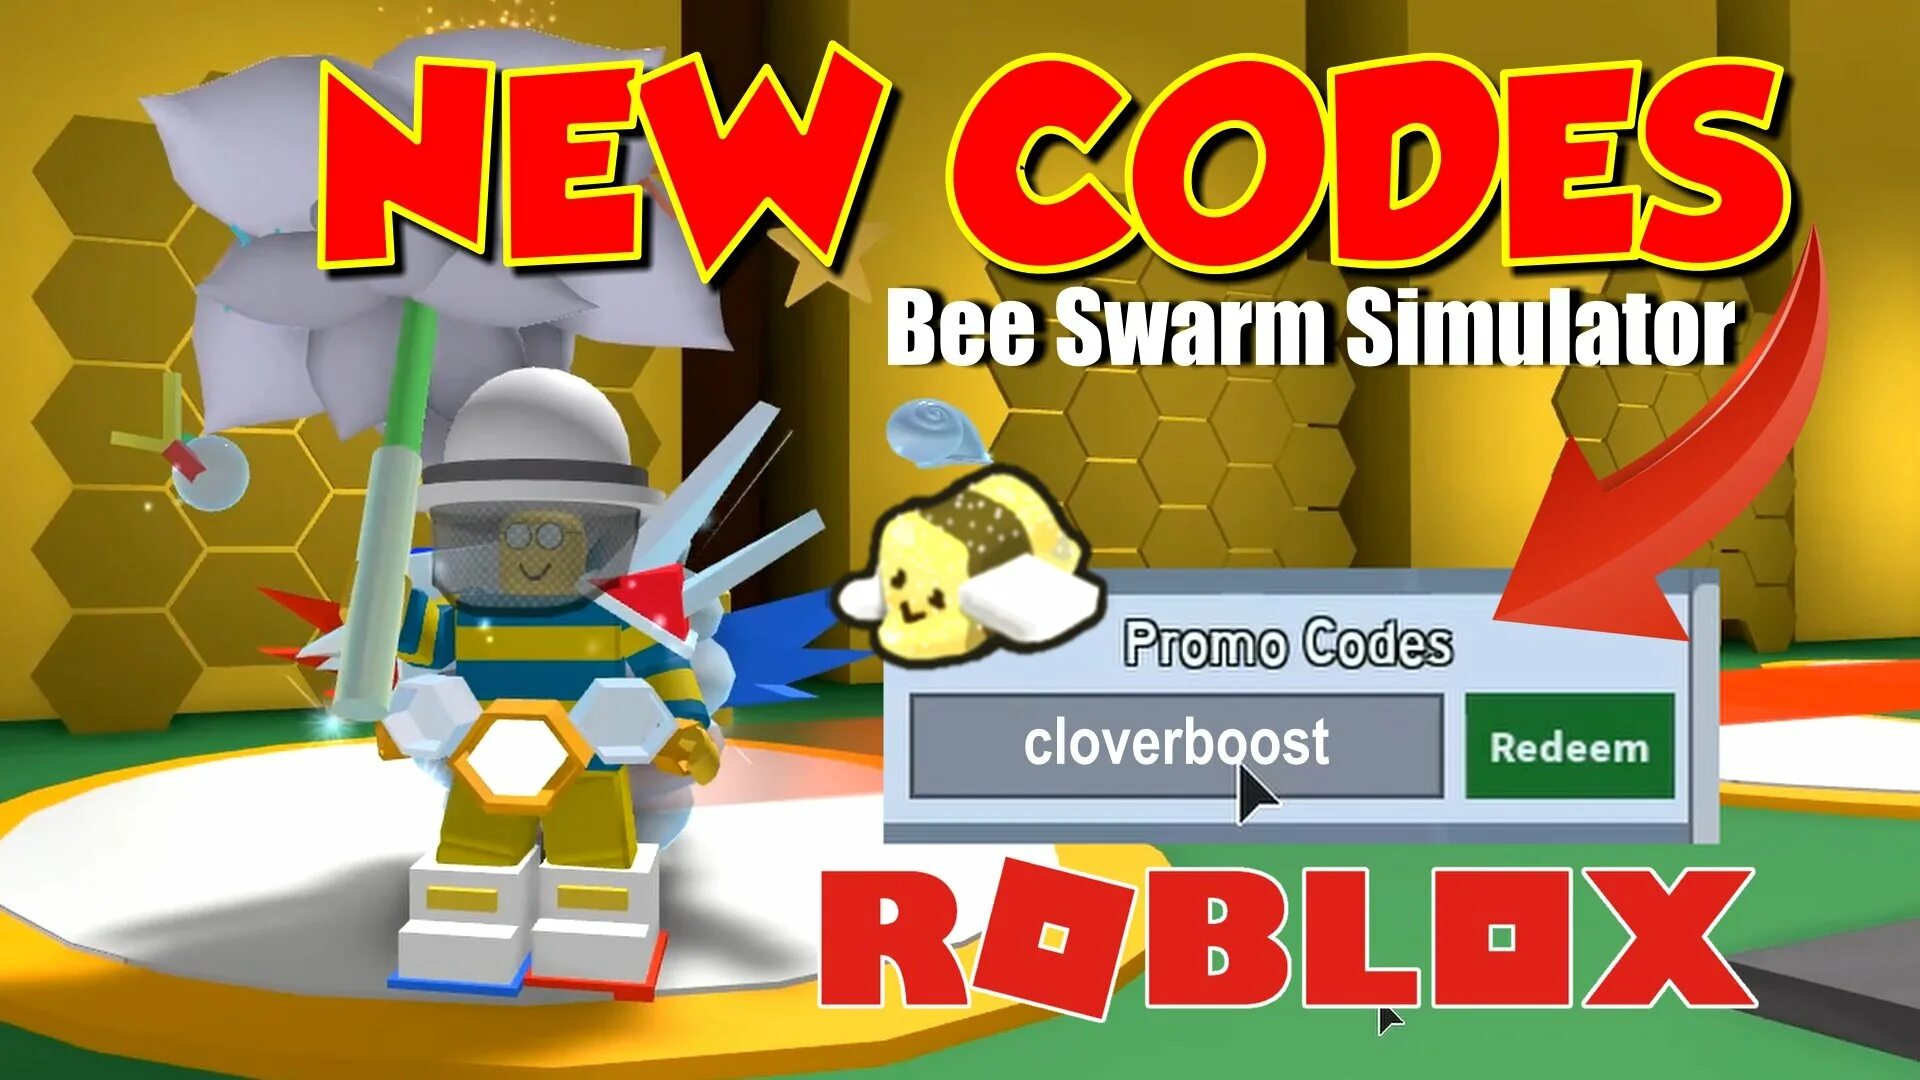 Bee Swarm Simulator codes. РОБЛОКС Bee Swarm Simulator. РОБЛОКС промокоды Bee Swarm Simulator. Roblox Bee Swarm Simulator codes. Swarm simulator роблокс